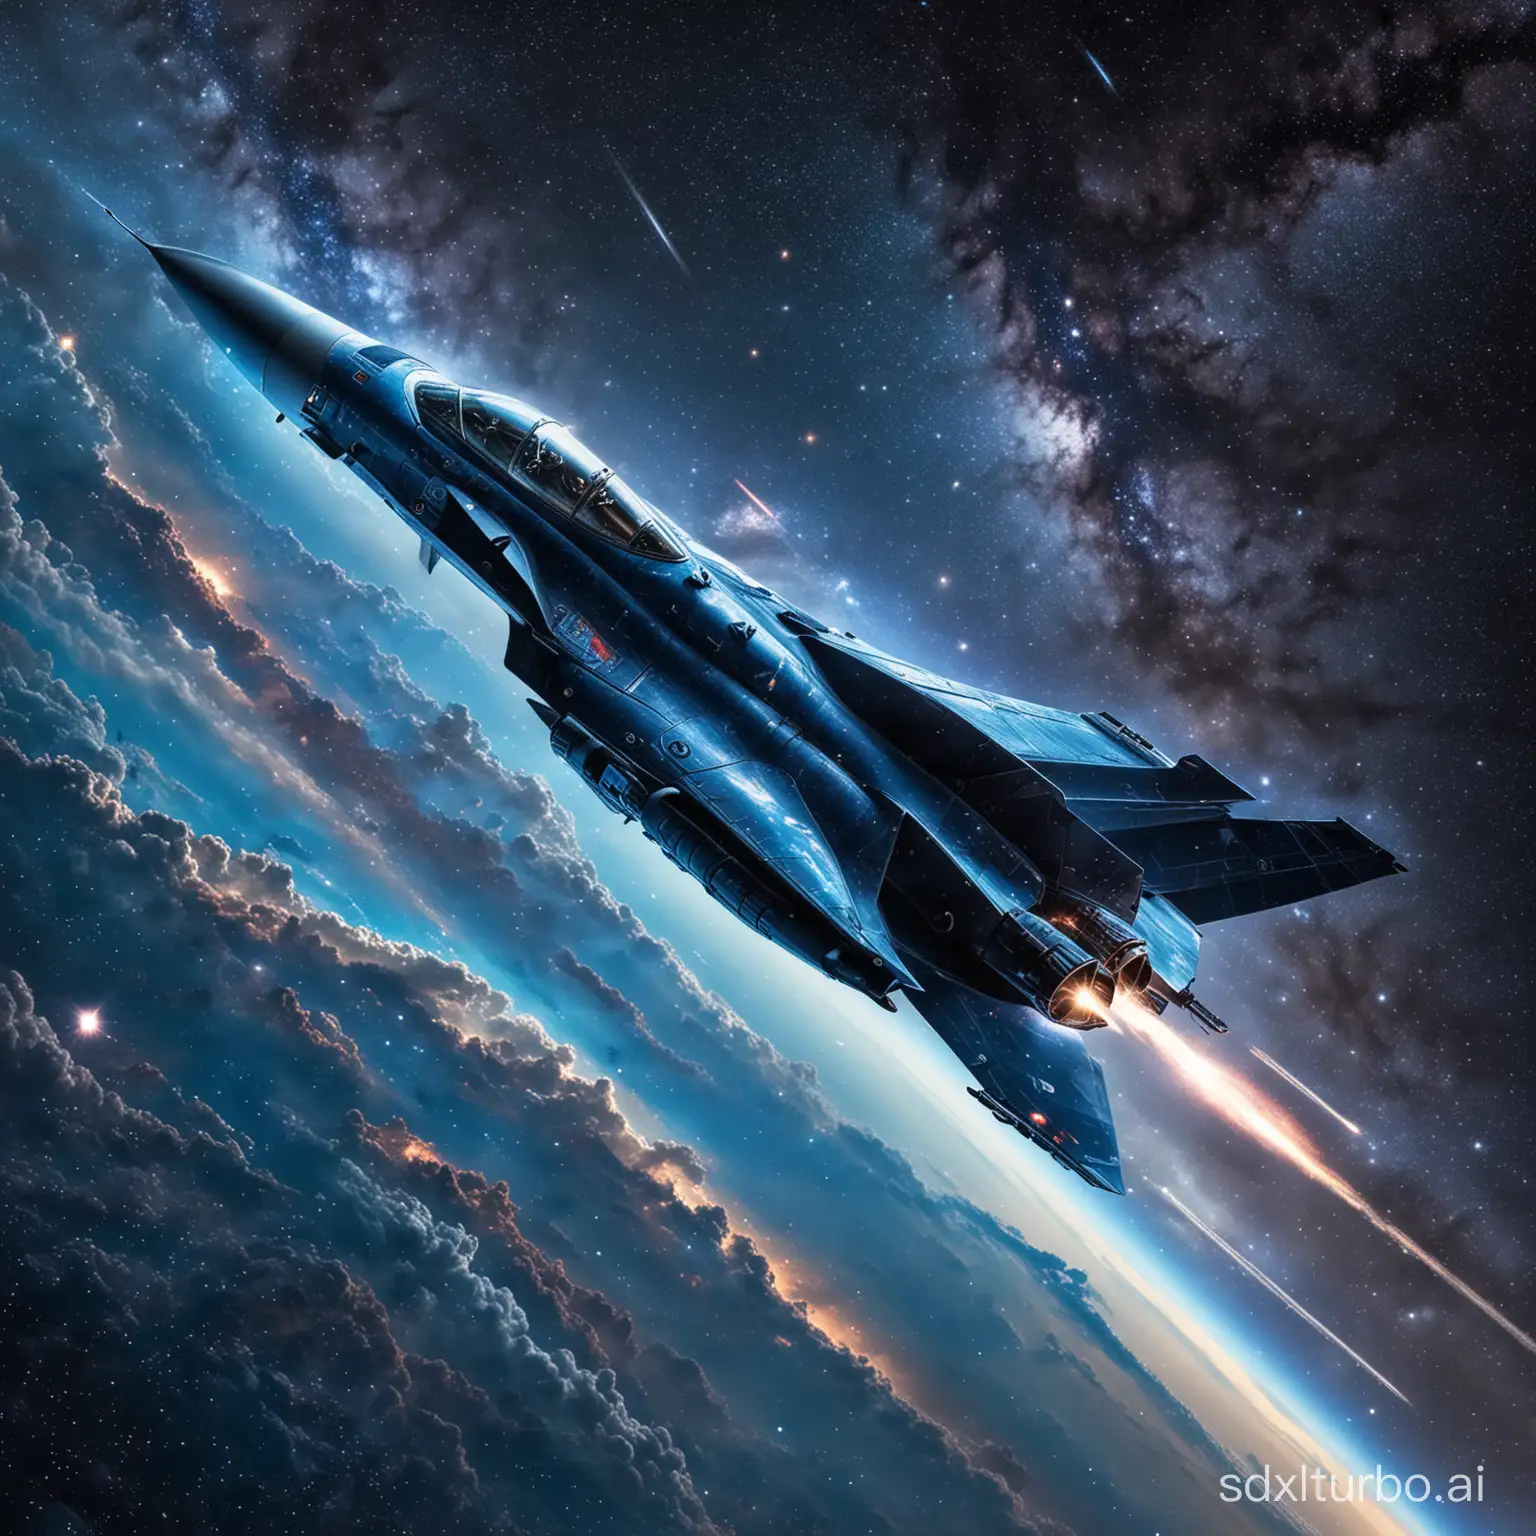 Sleek-Blue-Fighter-Jet-Soaring-Through-the-Milky-Way-Galaxy